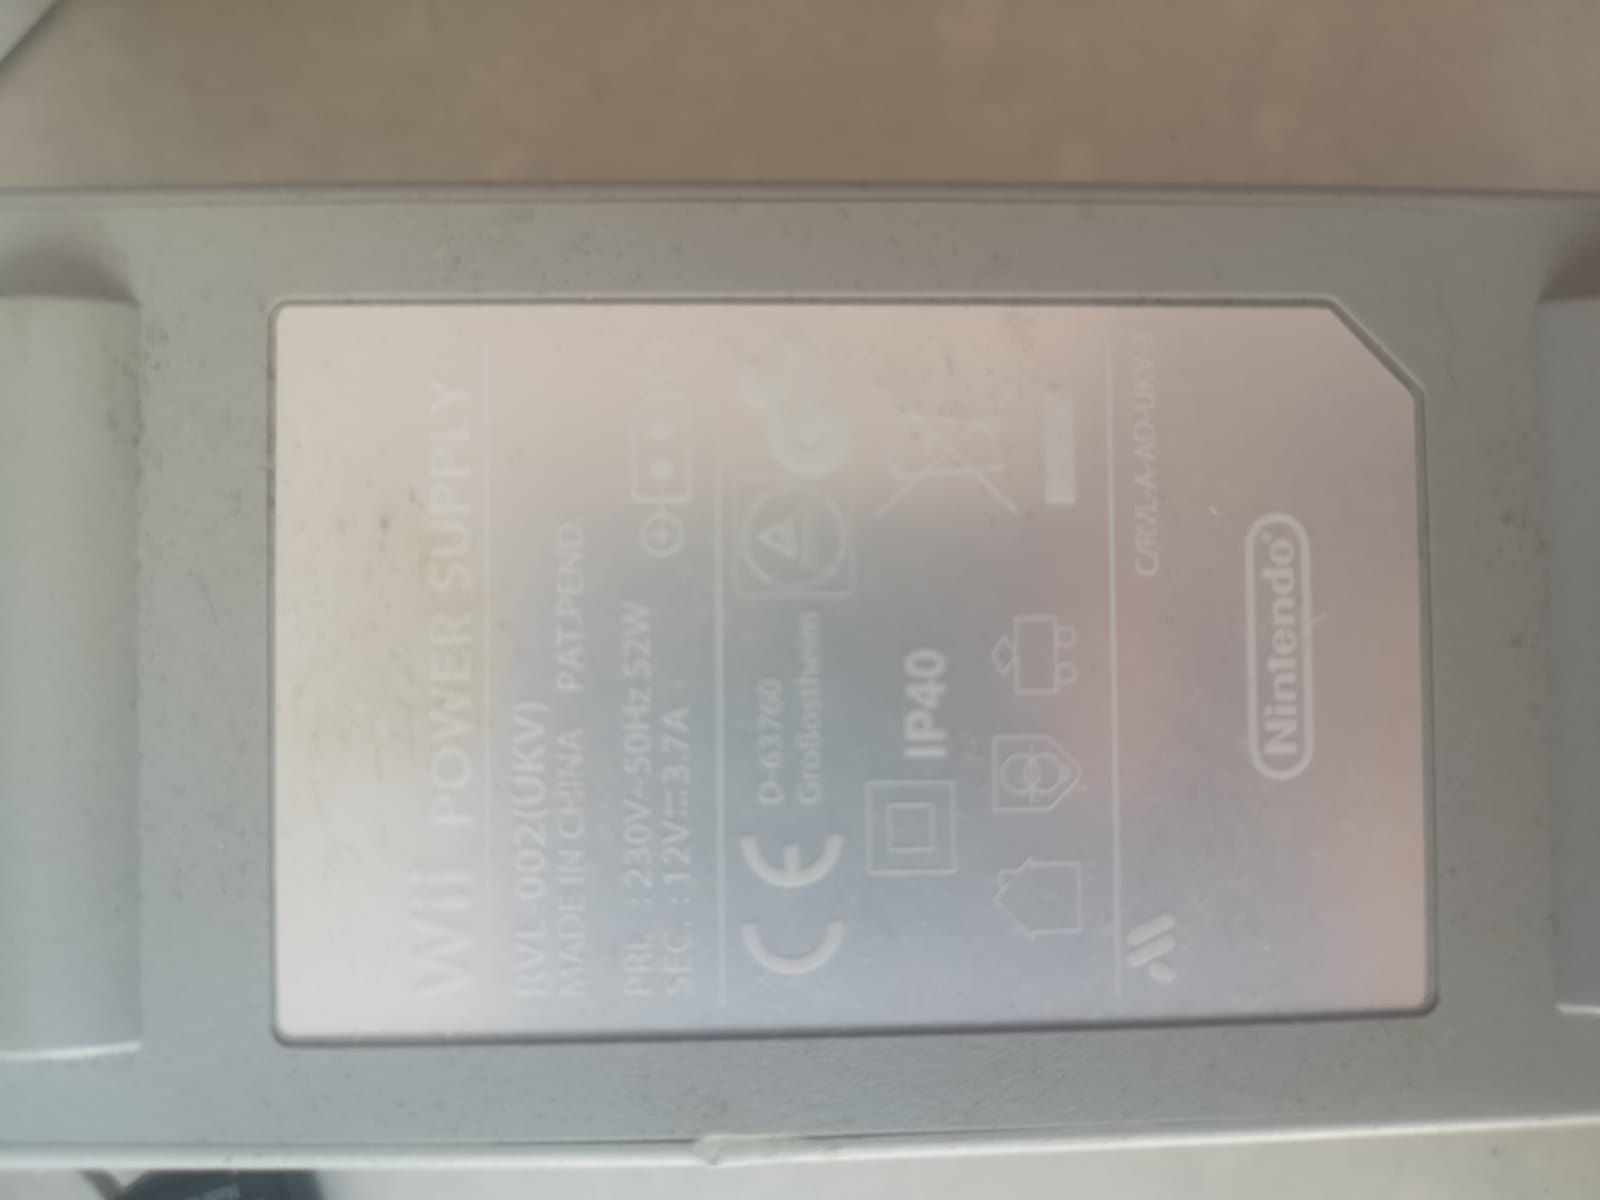 Wii model NO.RVL-001